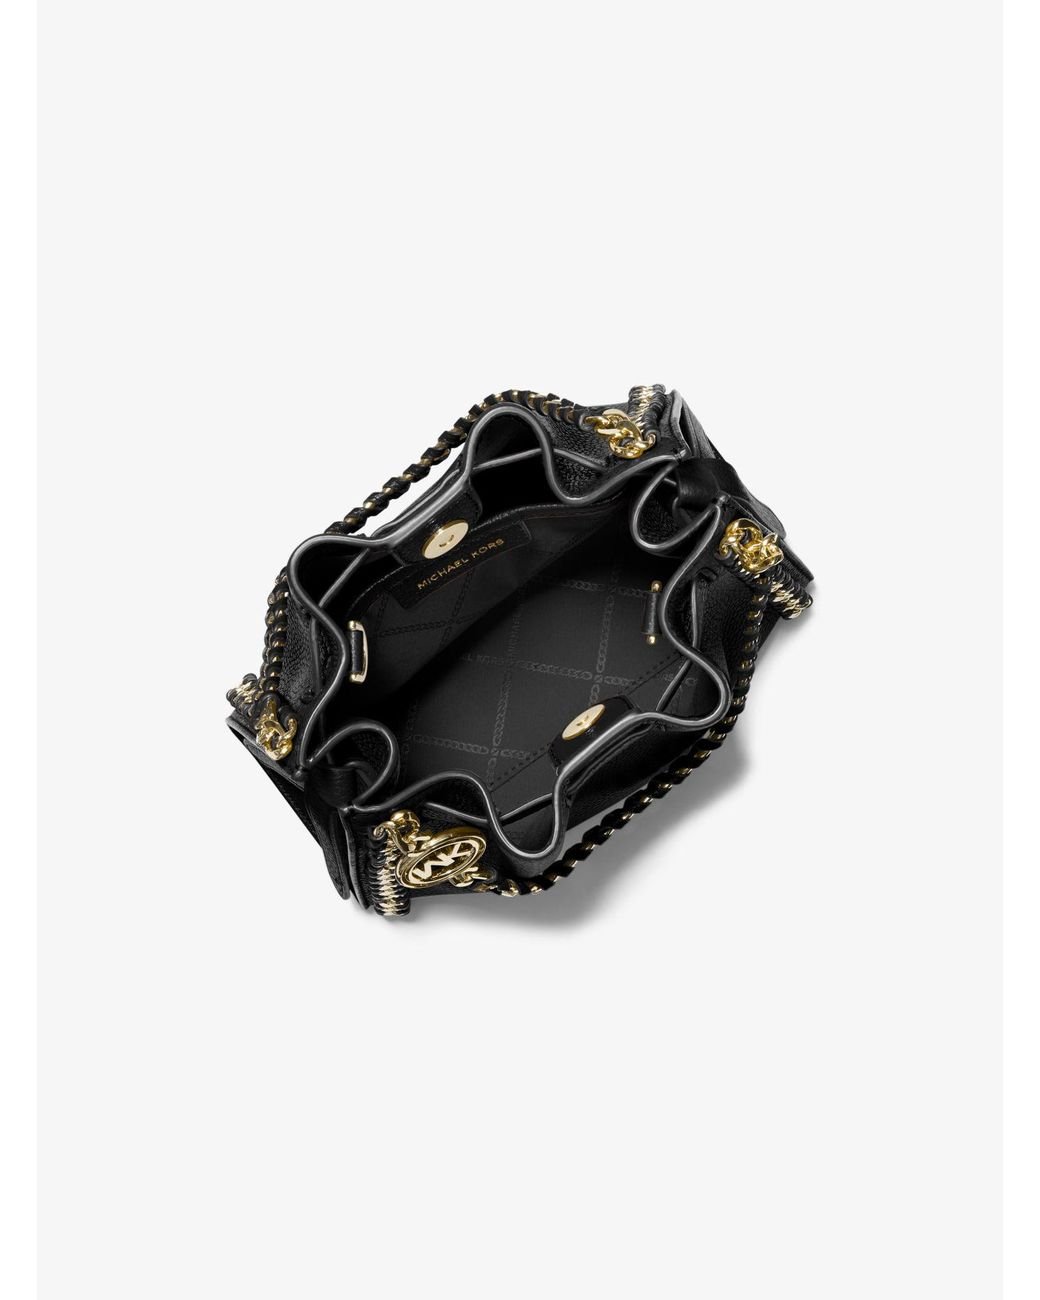 Michael Kors Mina Small Pebbled Leather Crossbody Bag in Black 